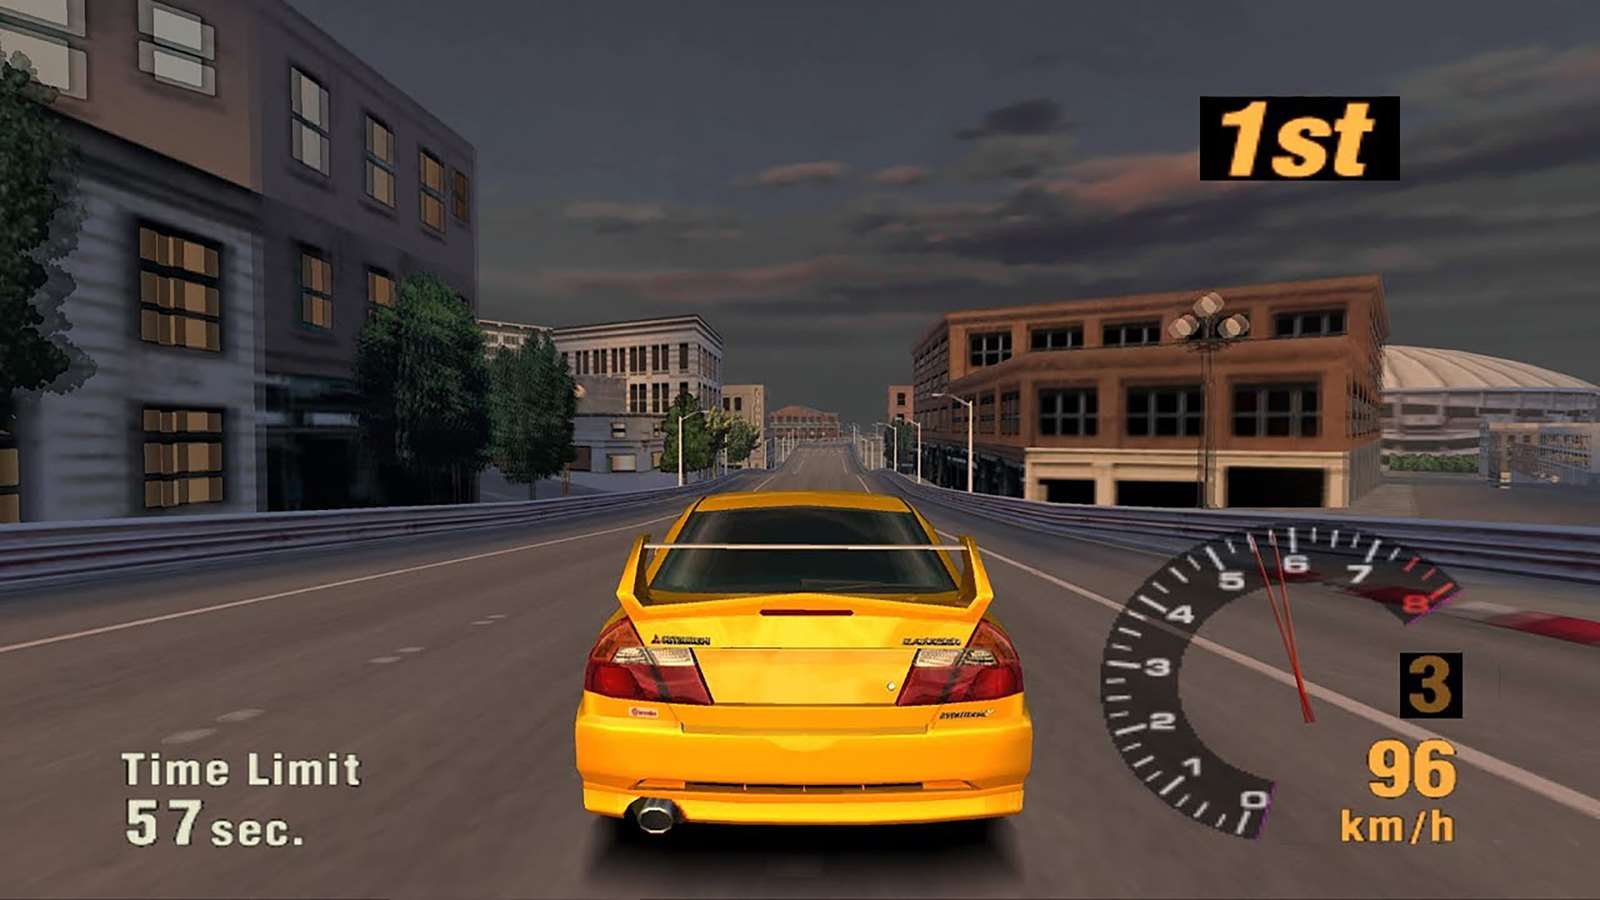 Gran Turismo 4 Prologue Gameplay (Playstation 2) 